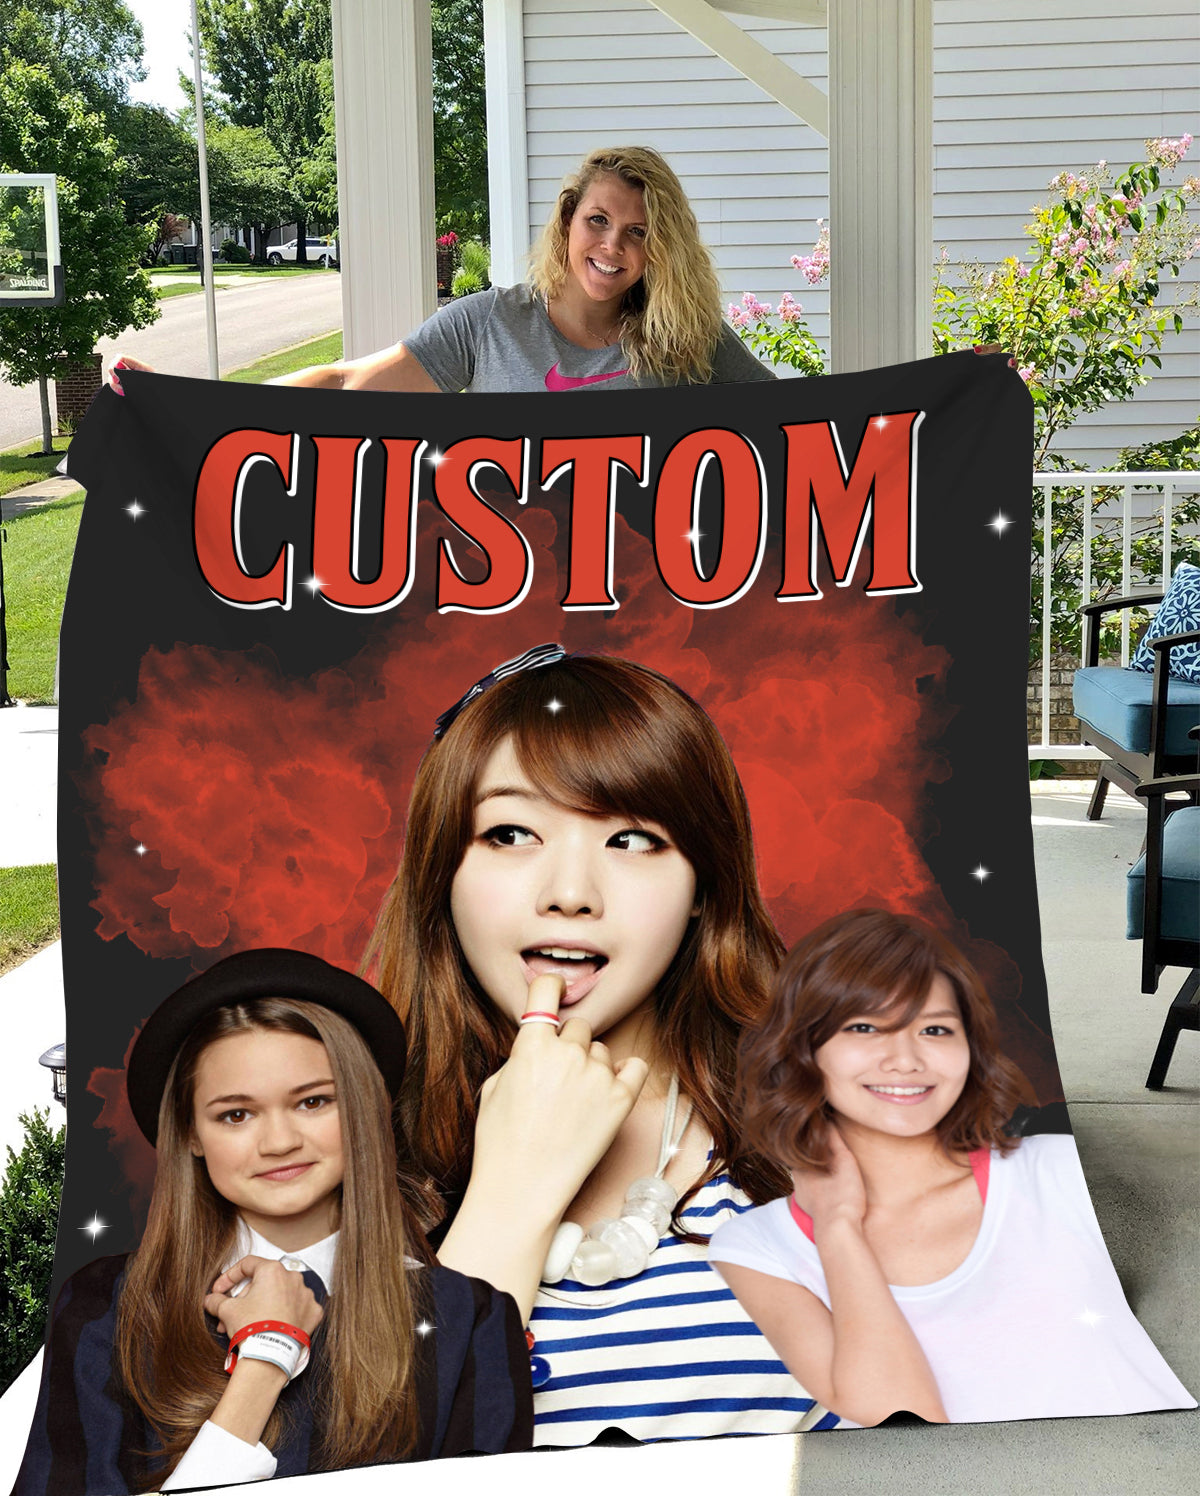 Custom Photo Collage Premium Black Sherpa Blanket - Gift for Family Members, Pet Lovers